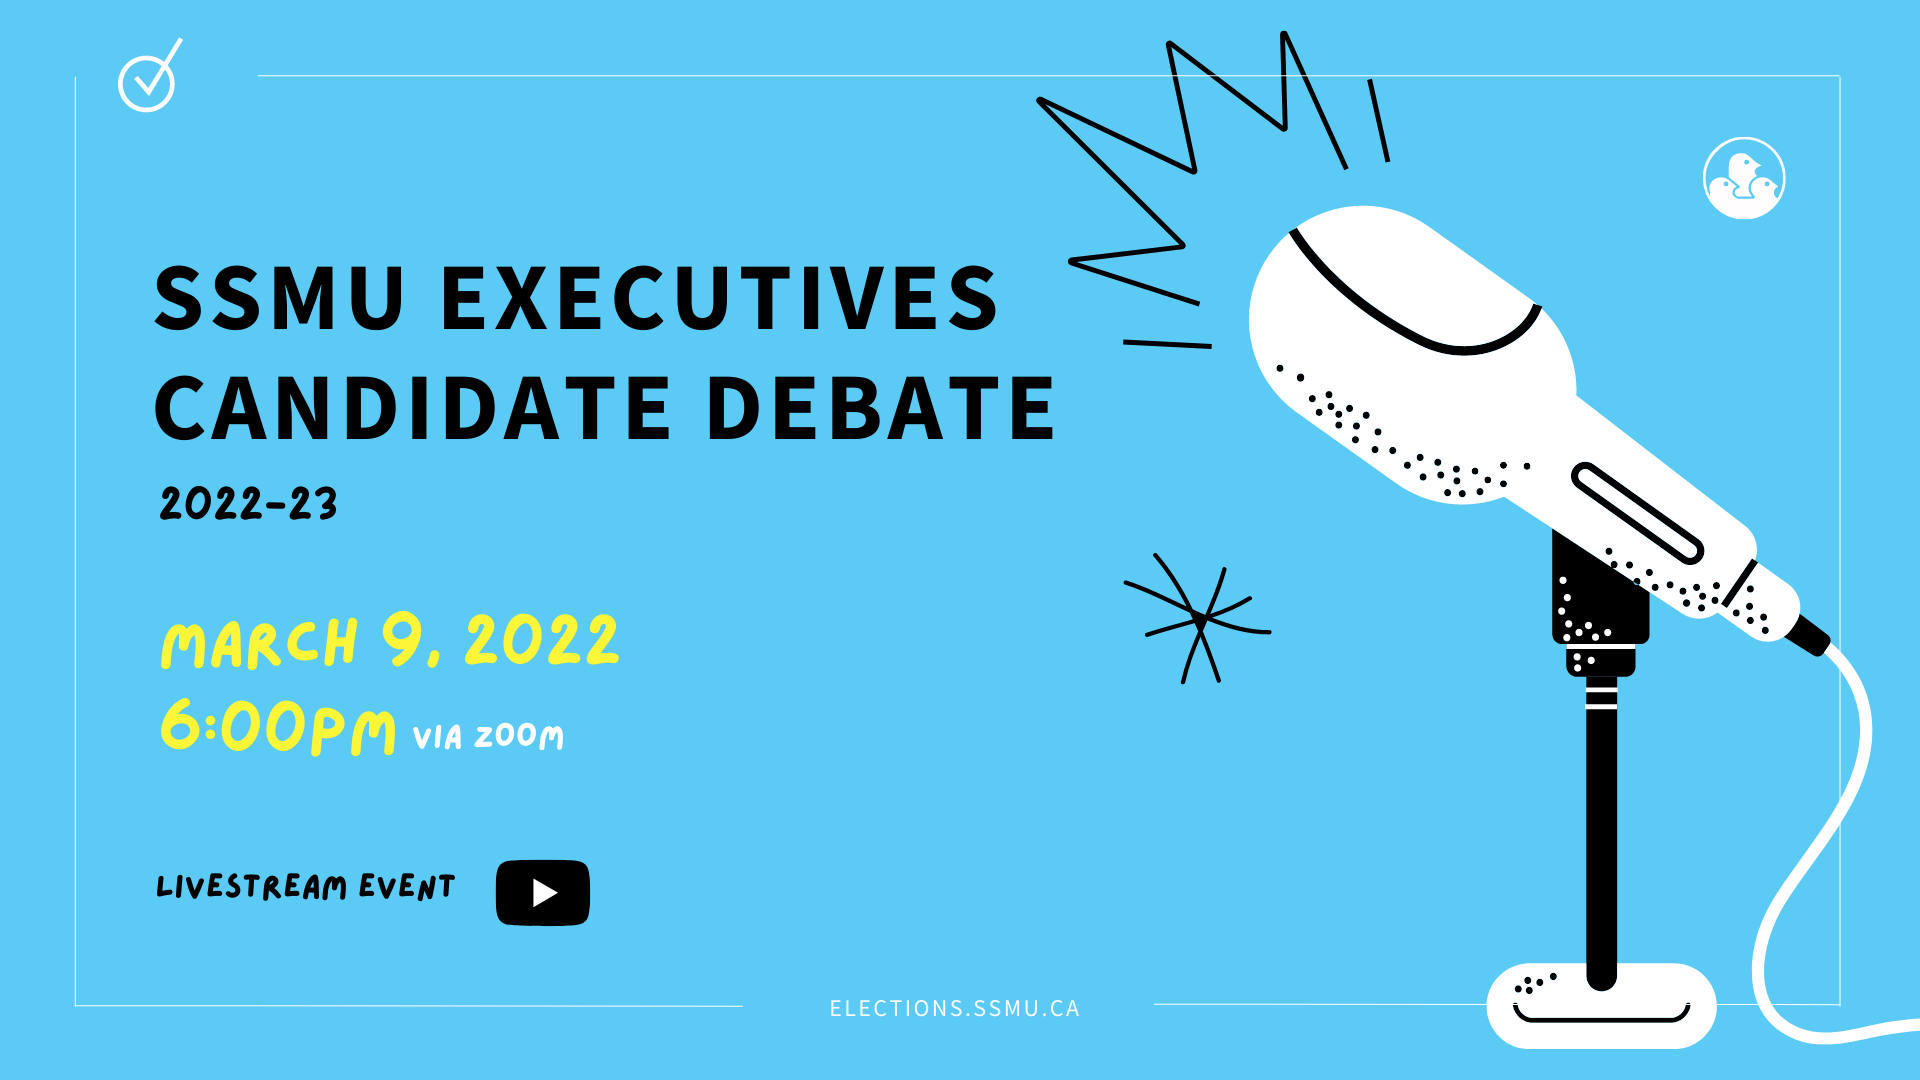 SSMU Executives Candidate Debate 2022